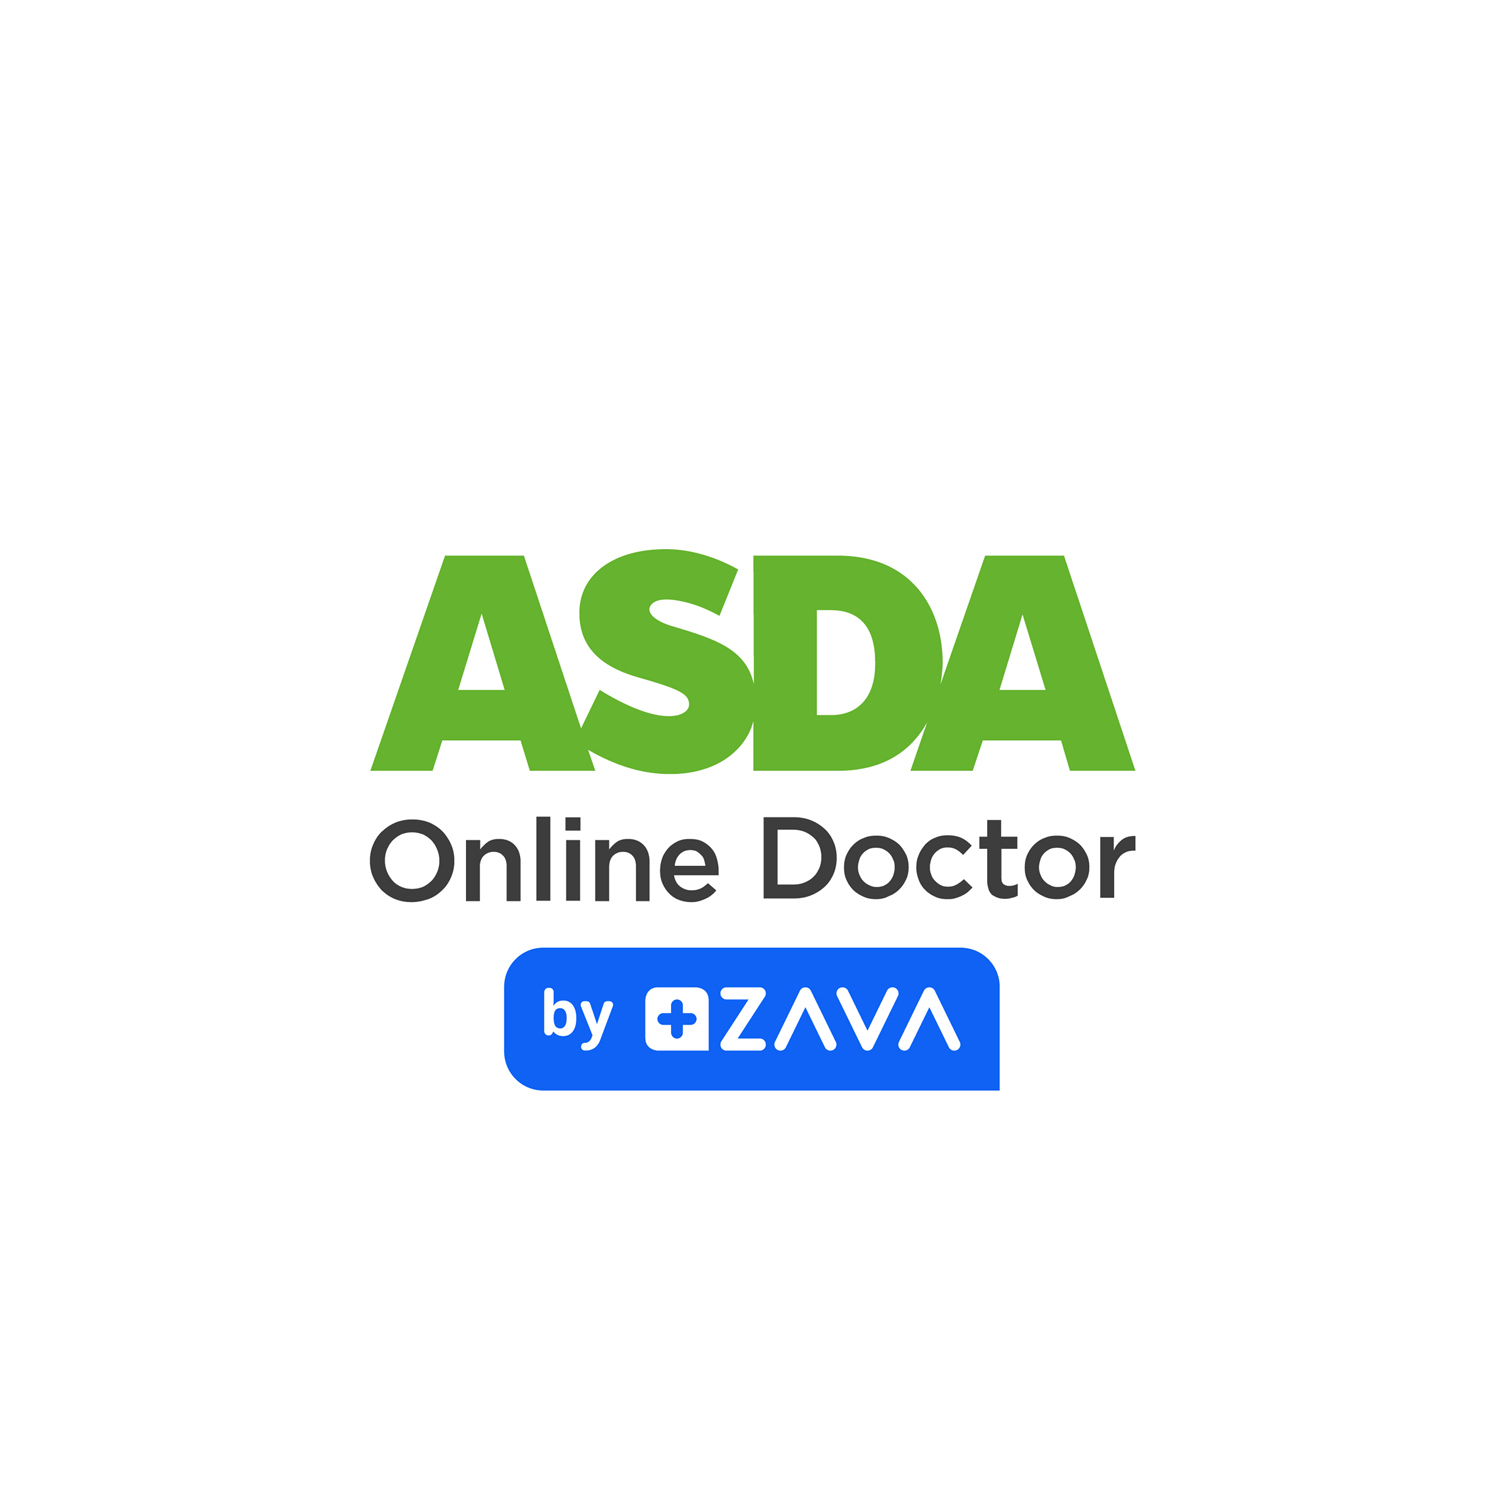 onlinedoctor.asda.com